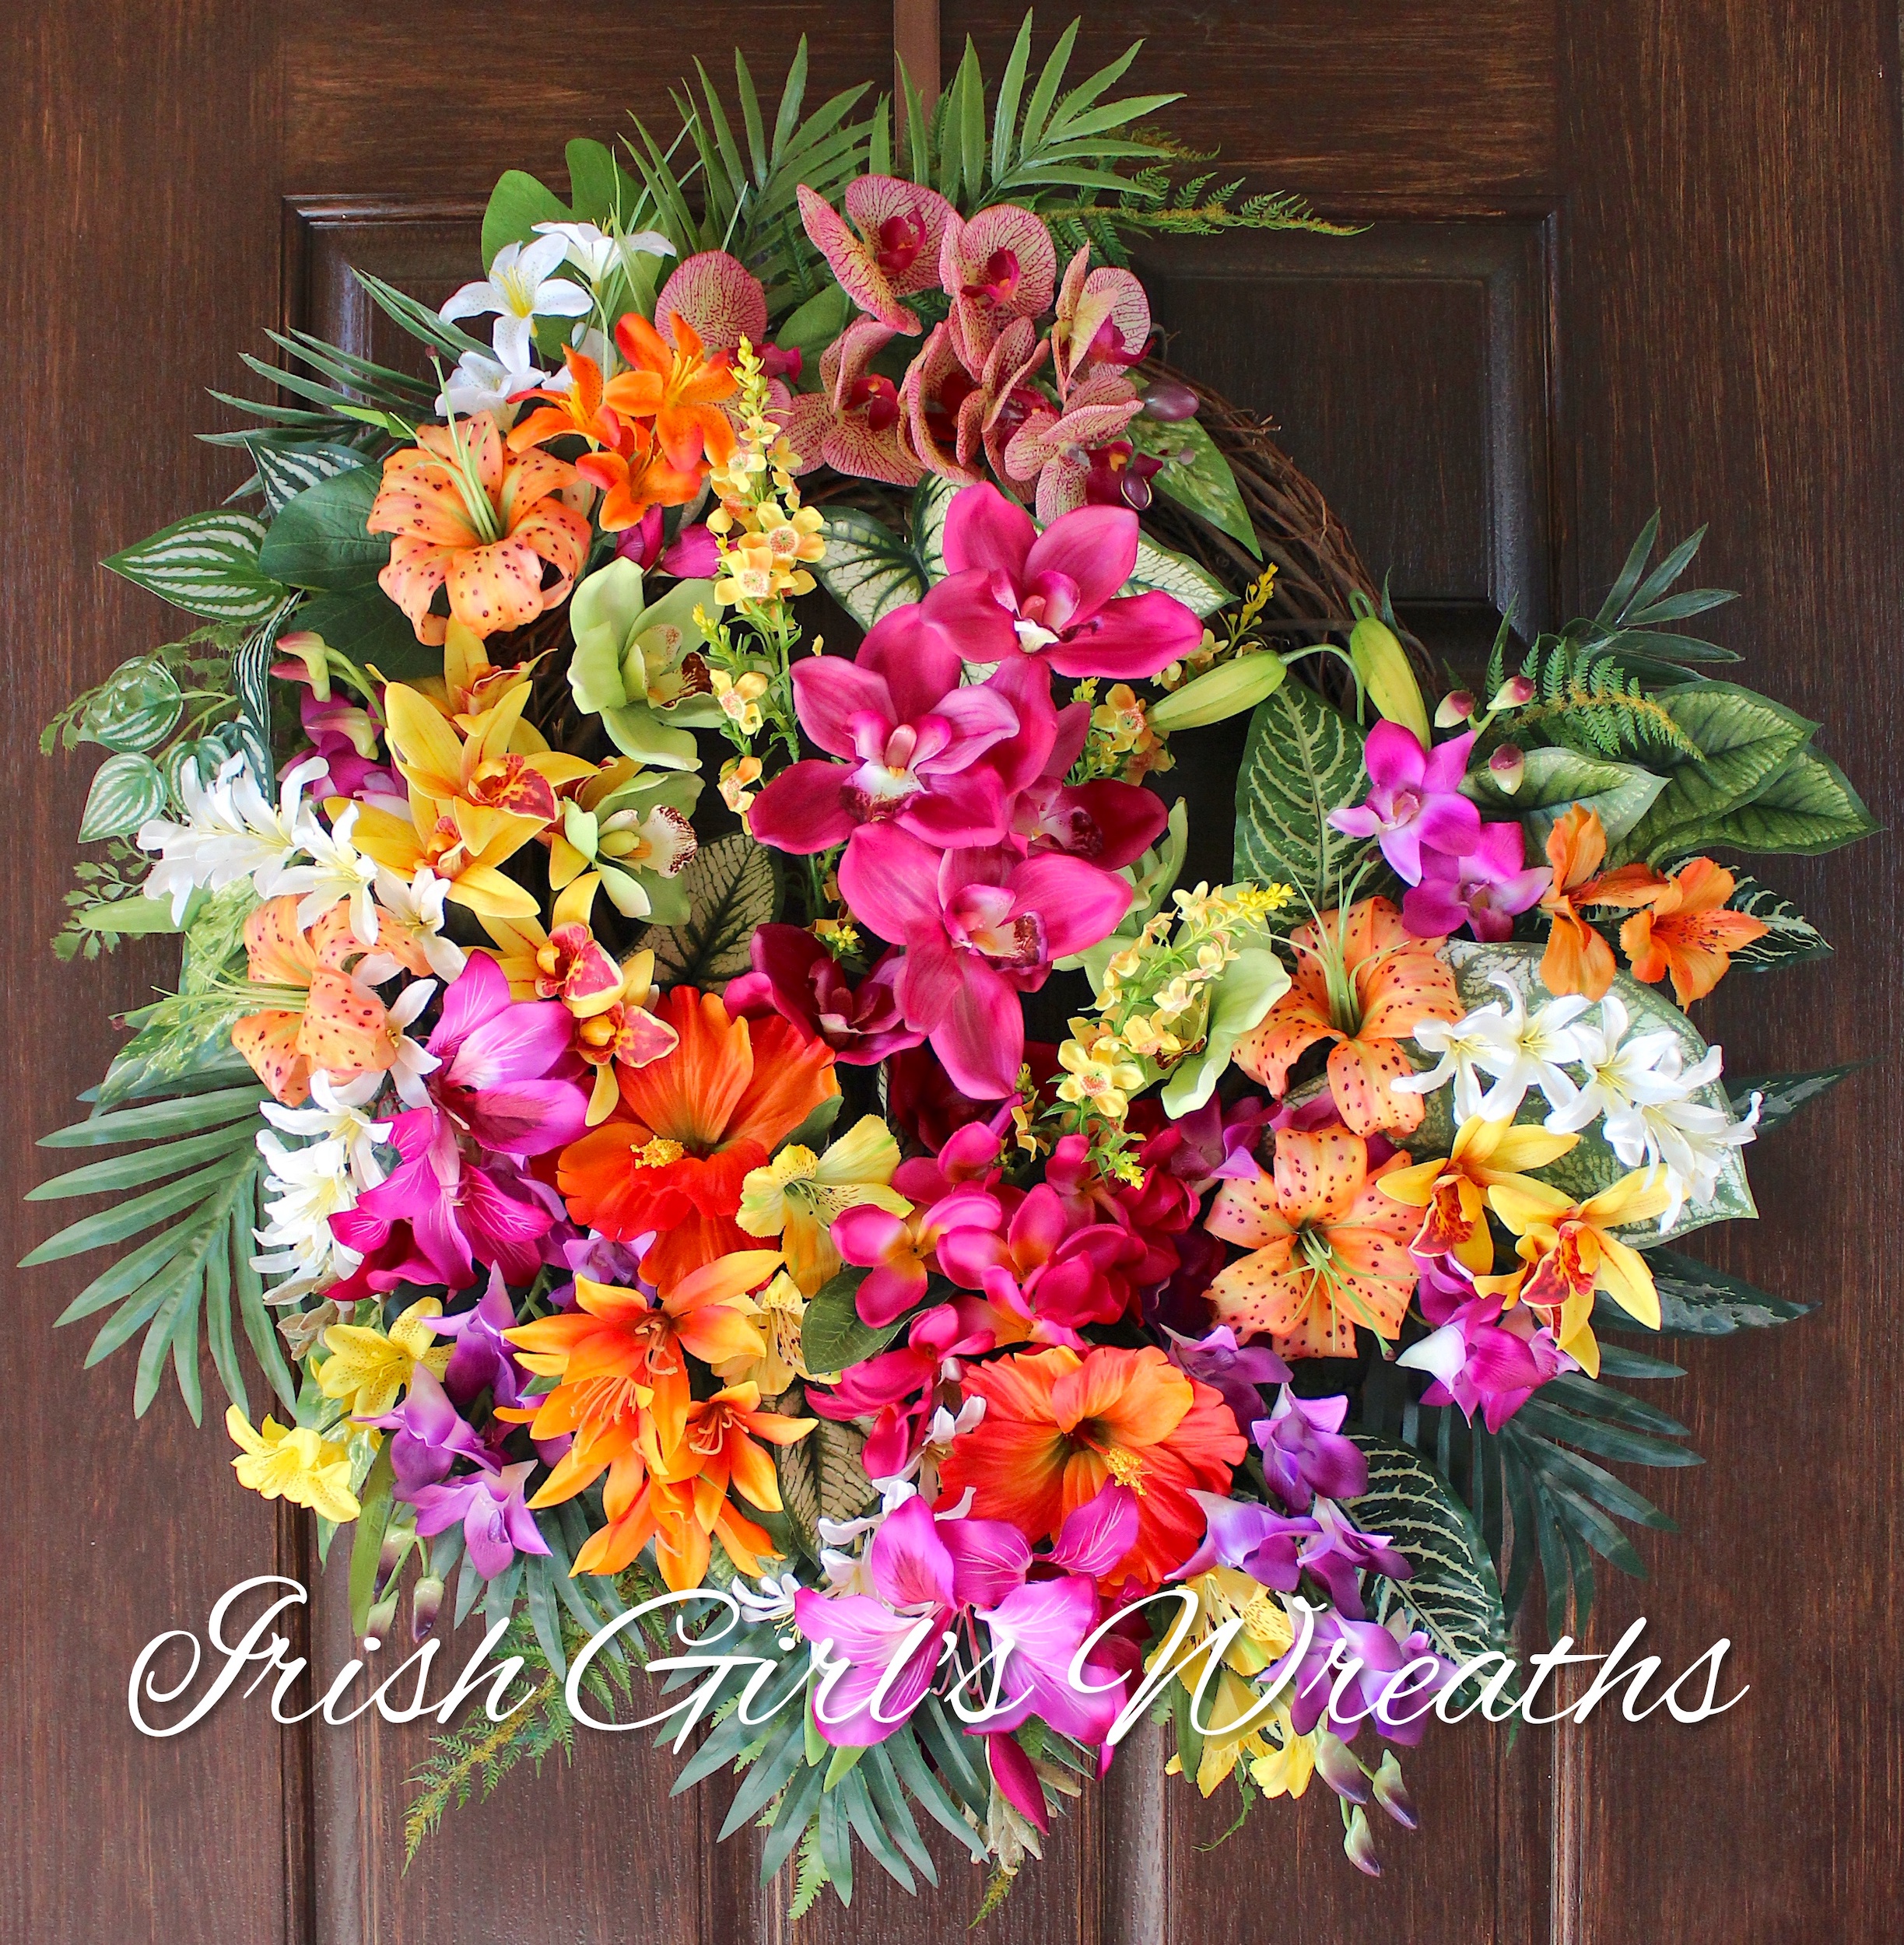 Hawaiian Island Luau Tropical Garden Wreath – Large Tropical Summer Wreath